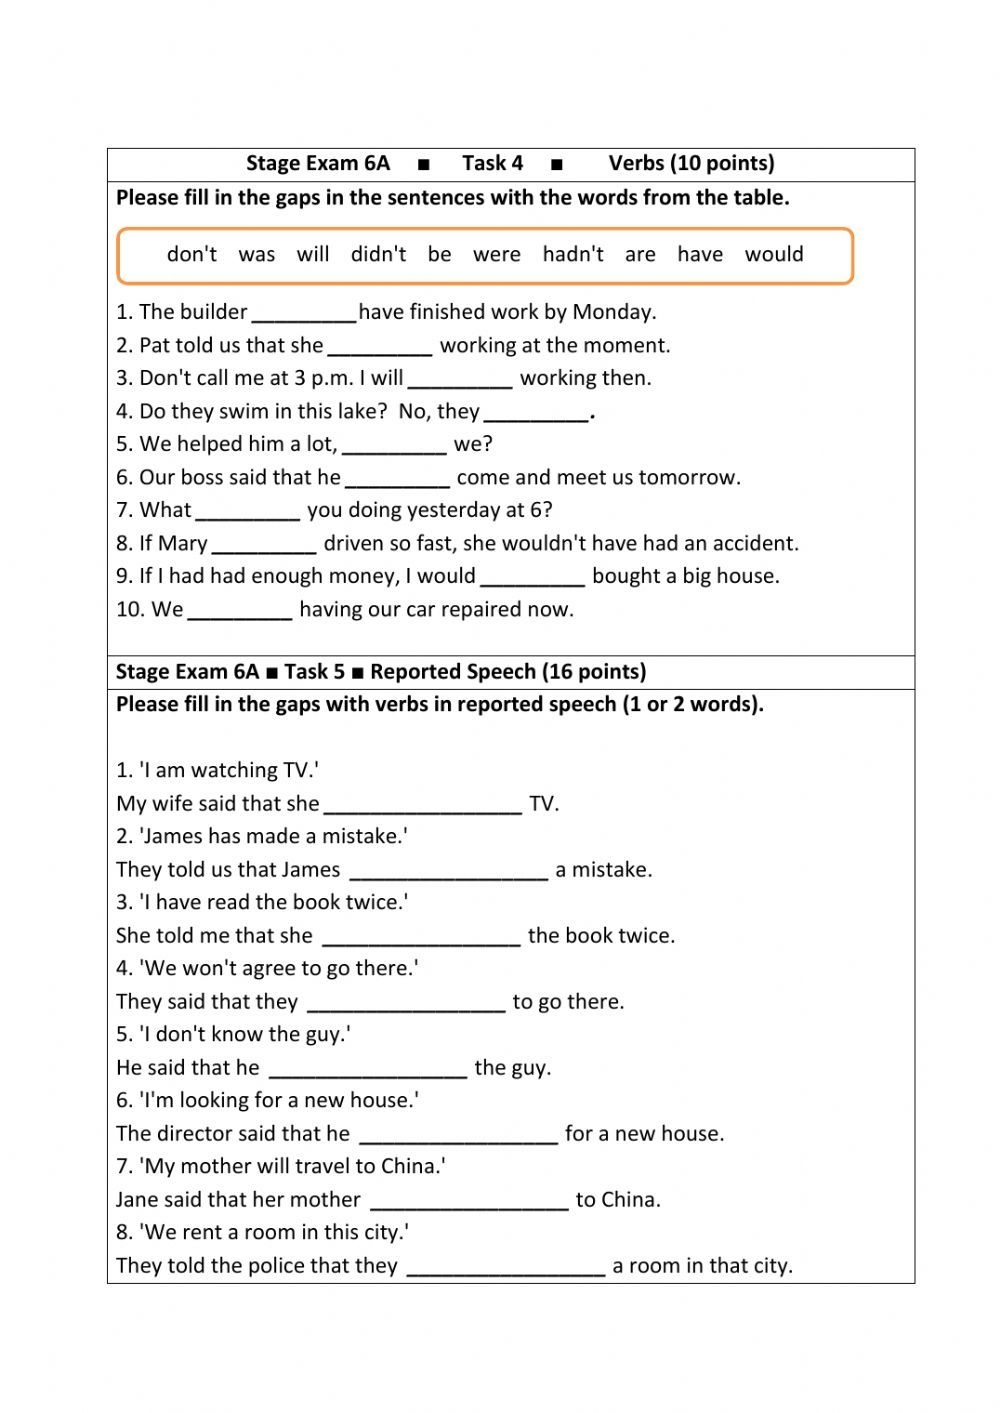 Stage 6 Grammar Exam Worksheet Grammar Worksheets English Grammar Worksheets Persuasive Writing Prompts